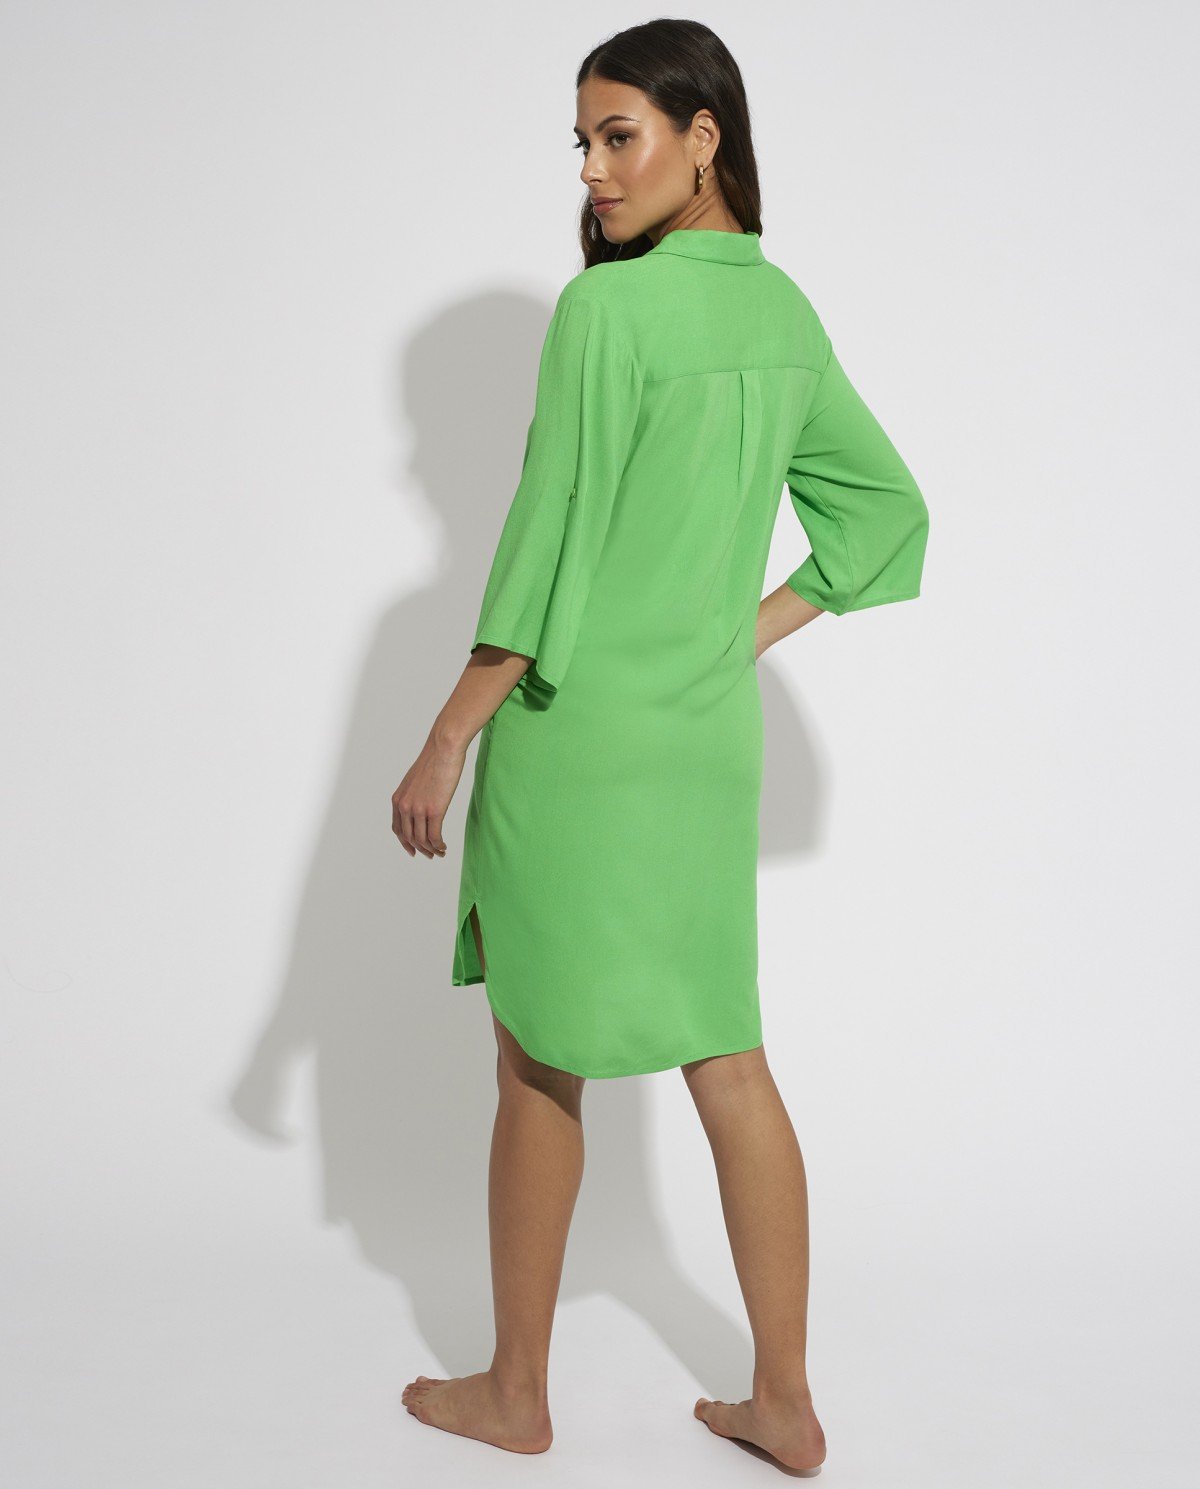 dress-bj595-c38-green (1).jpg